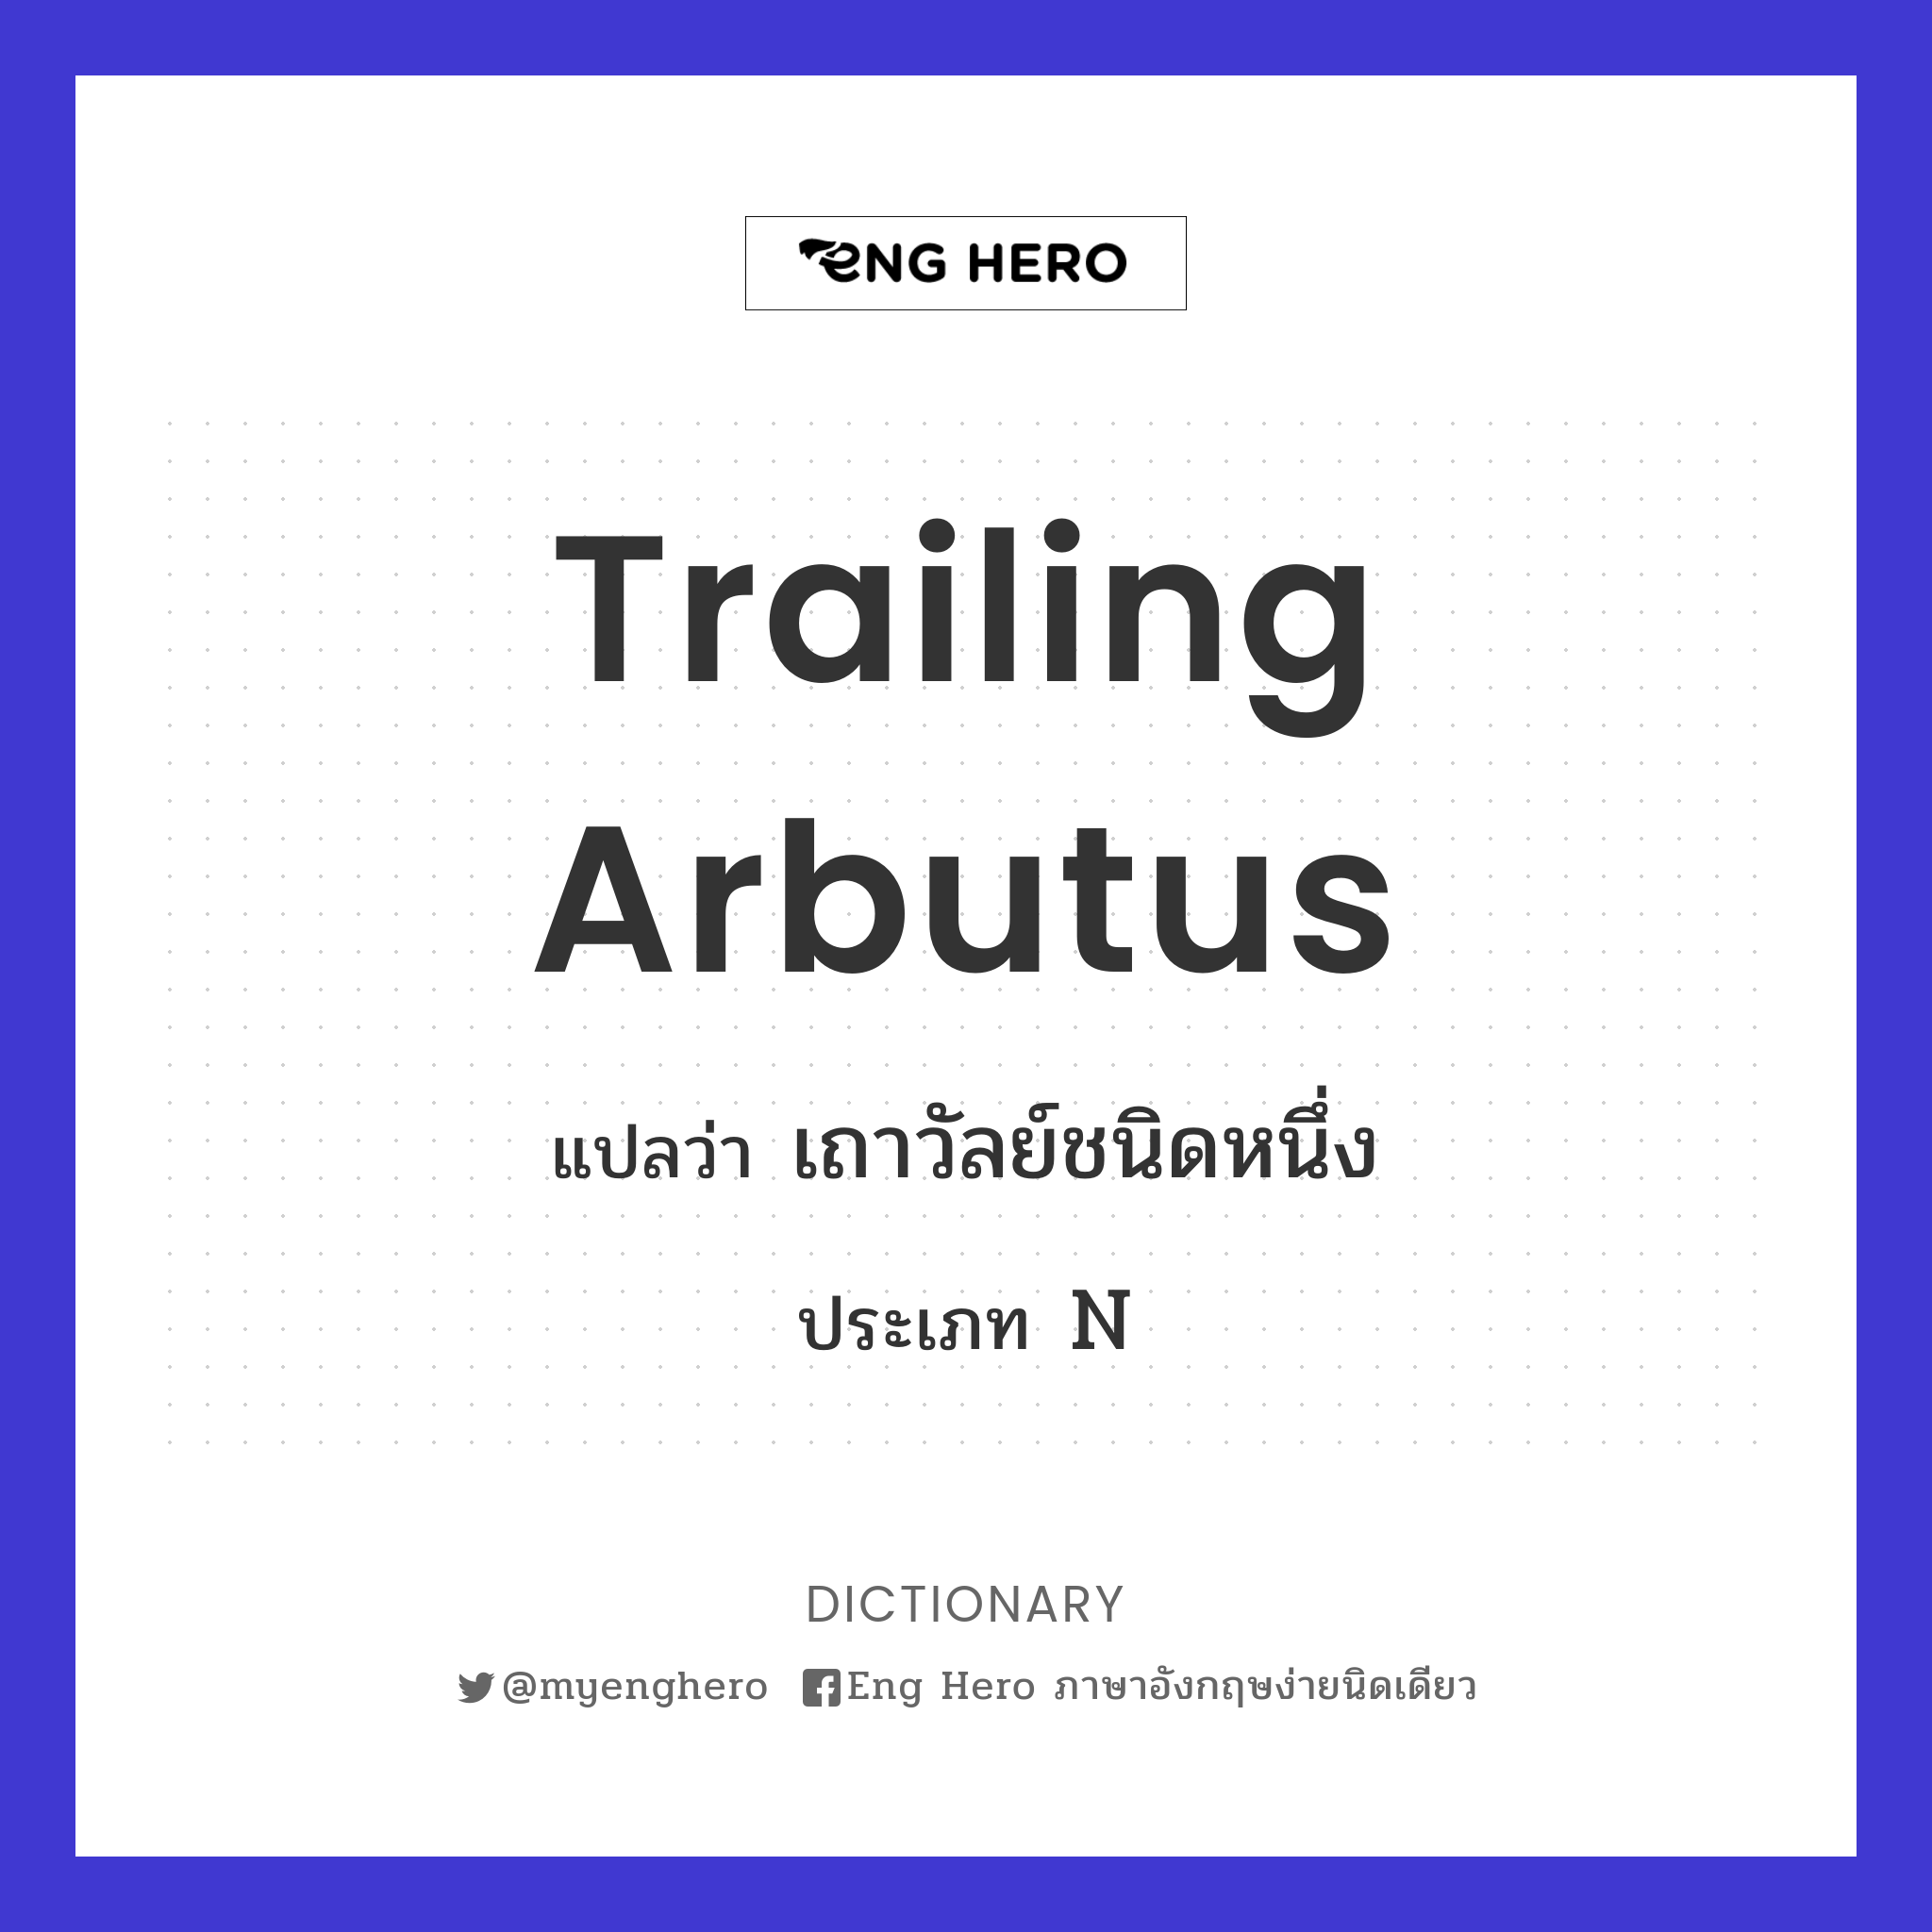 trailing arbutus